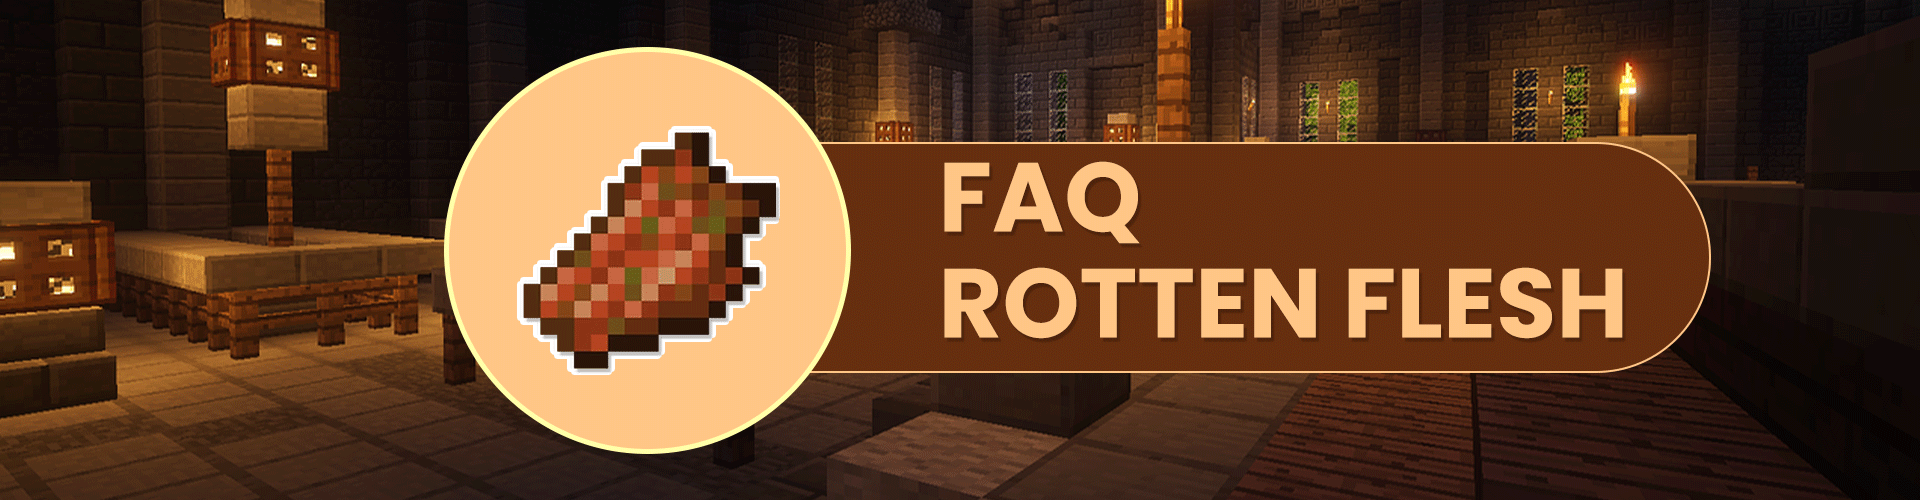 FAQs on Rotten Flesh in Minecraft